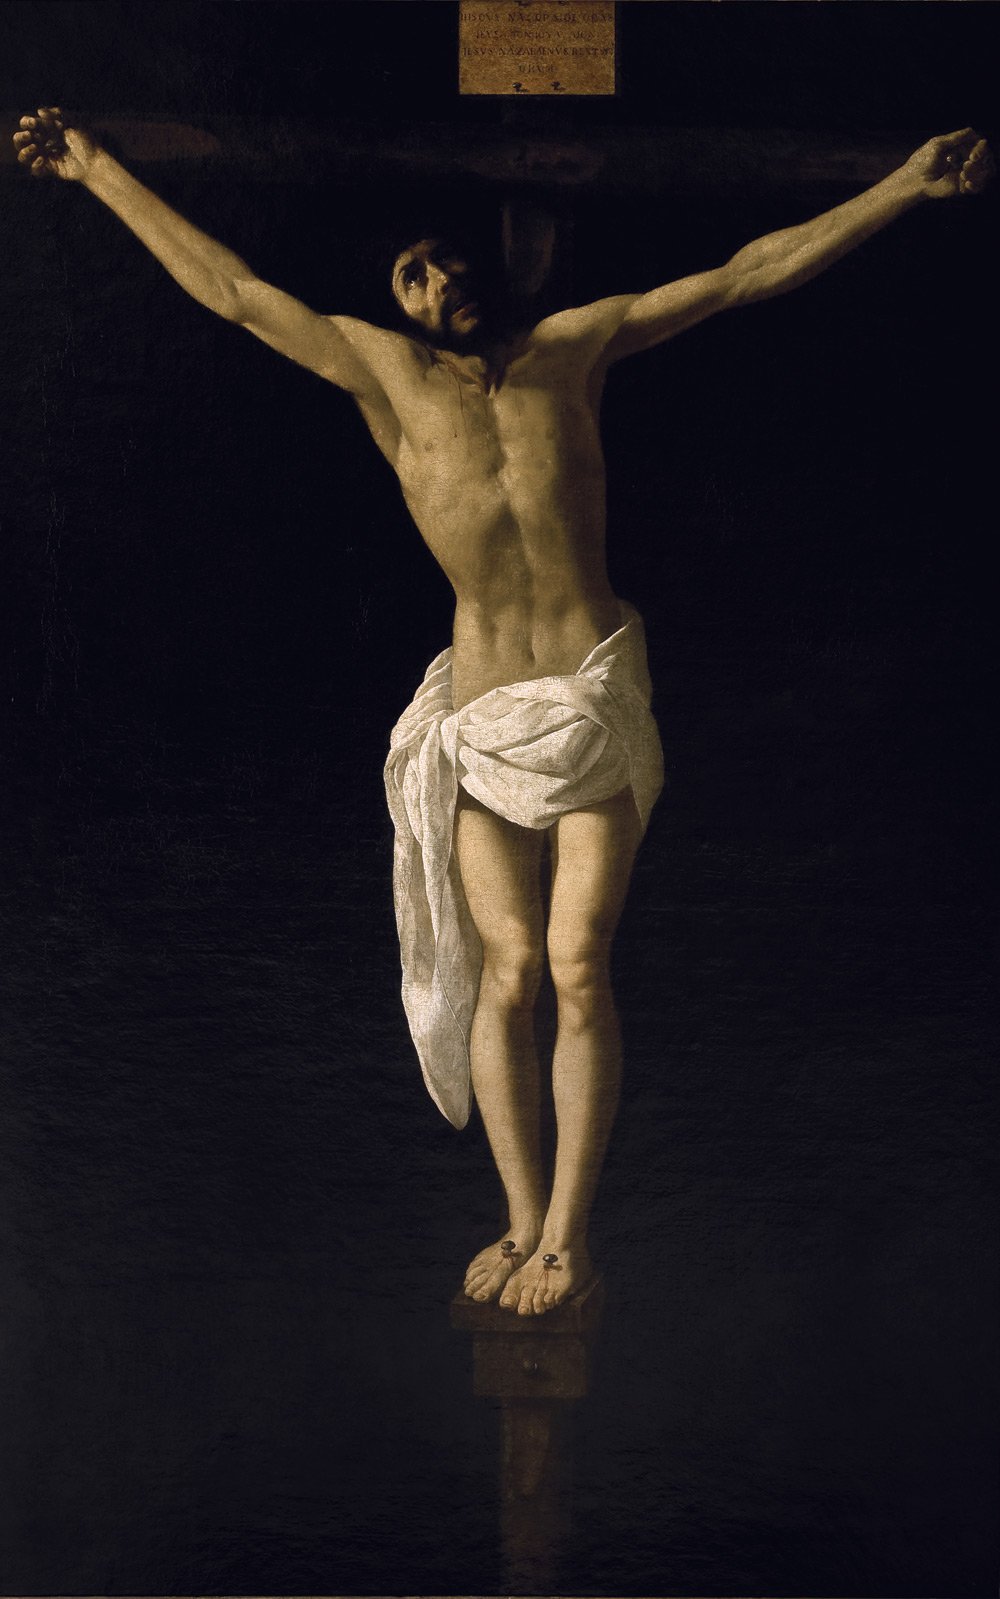 Crucifixion by Francisco de Zurbarán - circa 1630 - 168.9 x 109.8 cm Museo de Arte de Ponce